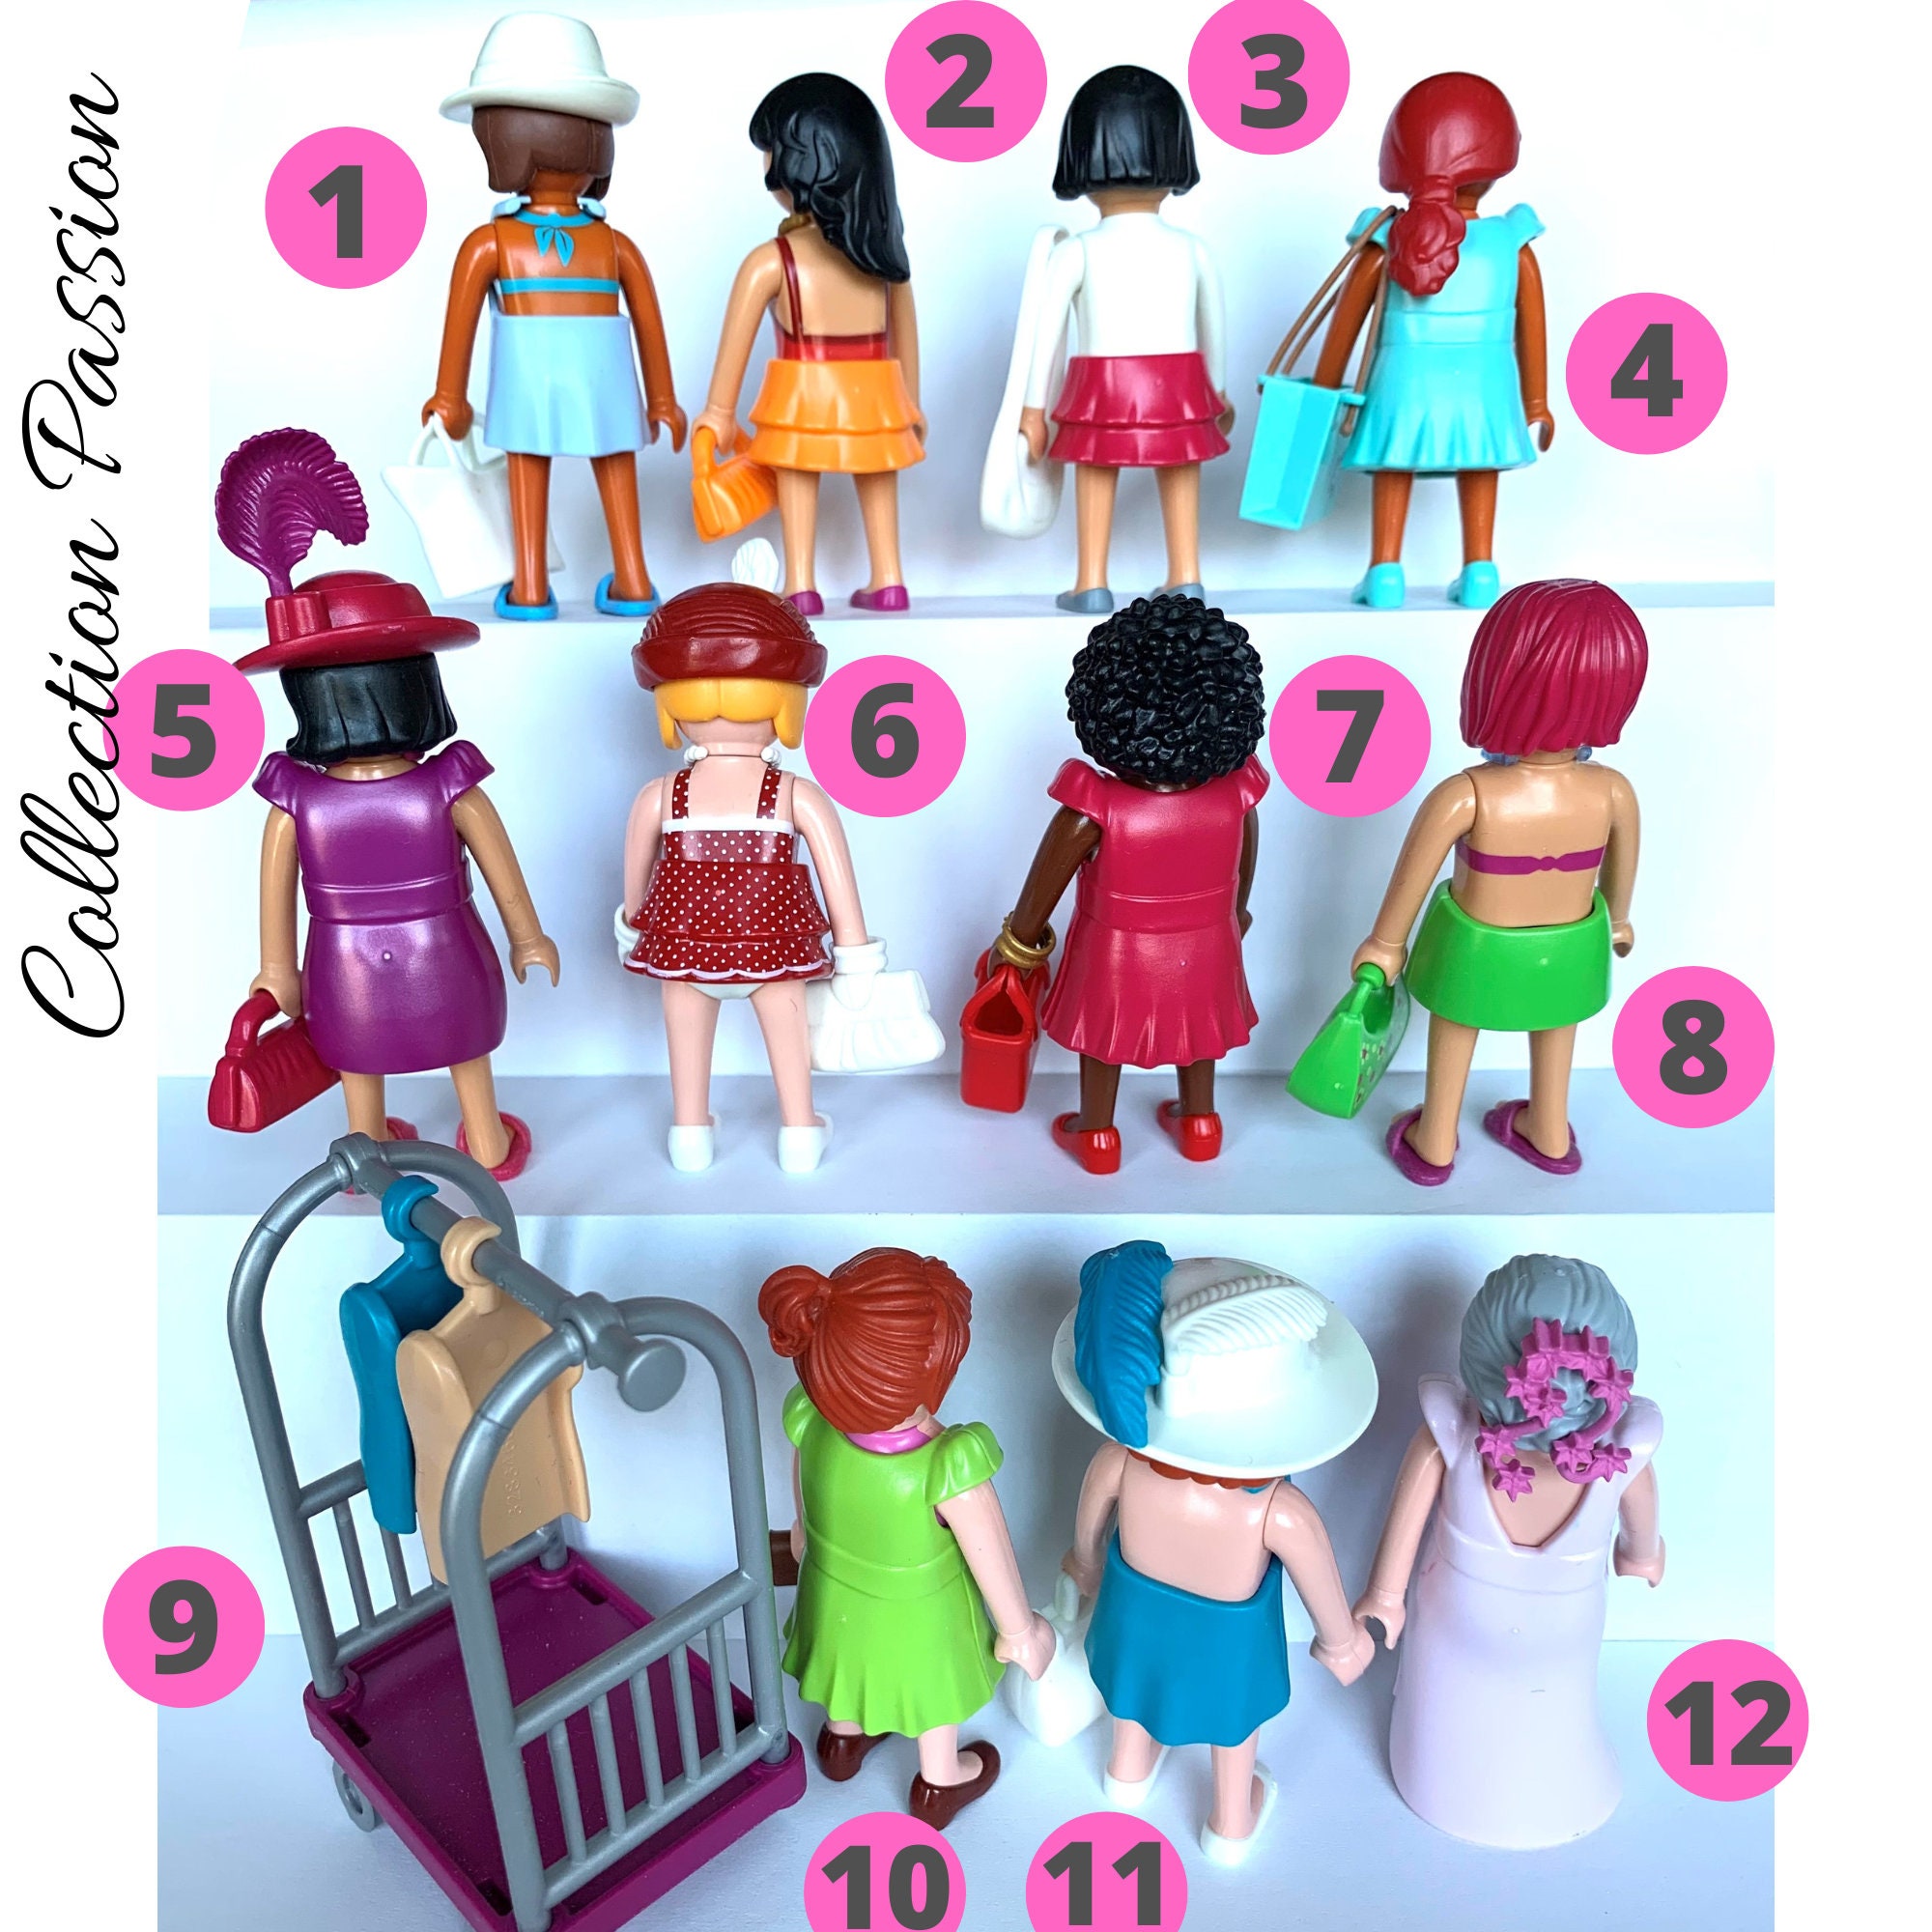 Figurine Playmobil® City life - Petite fille